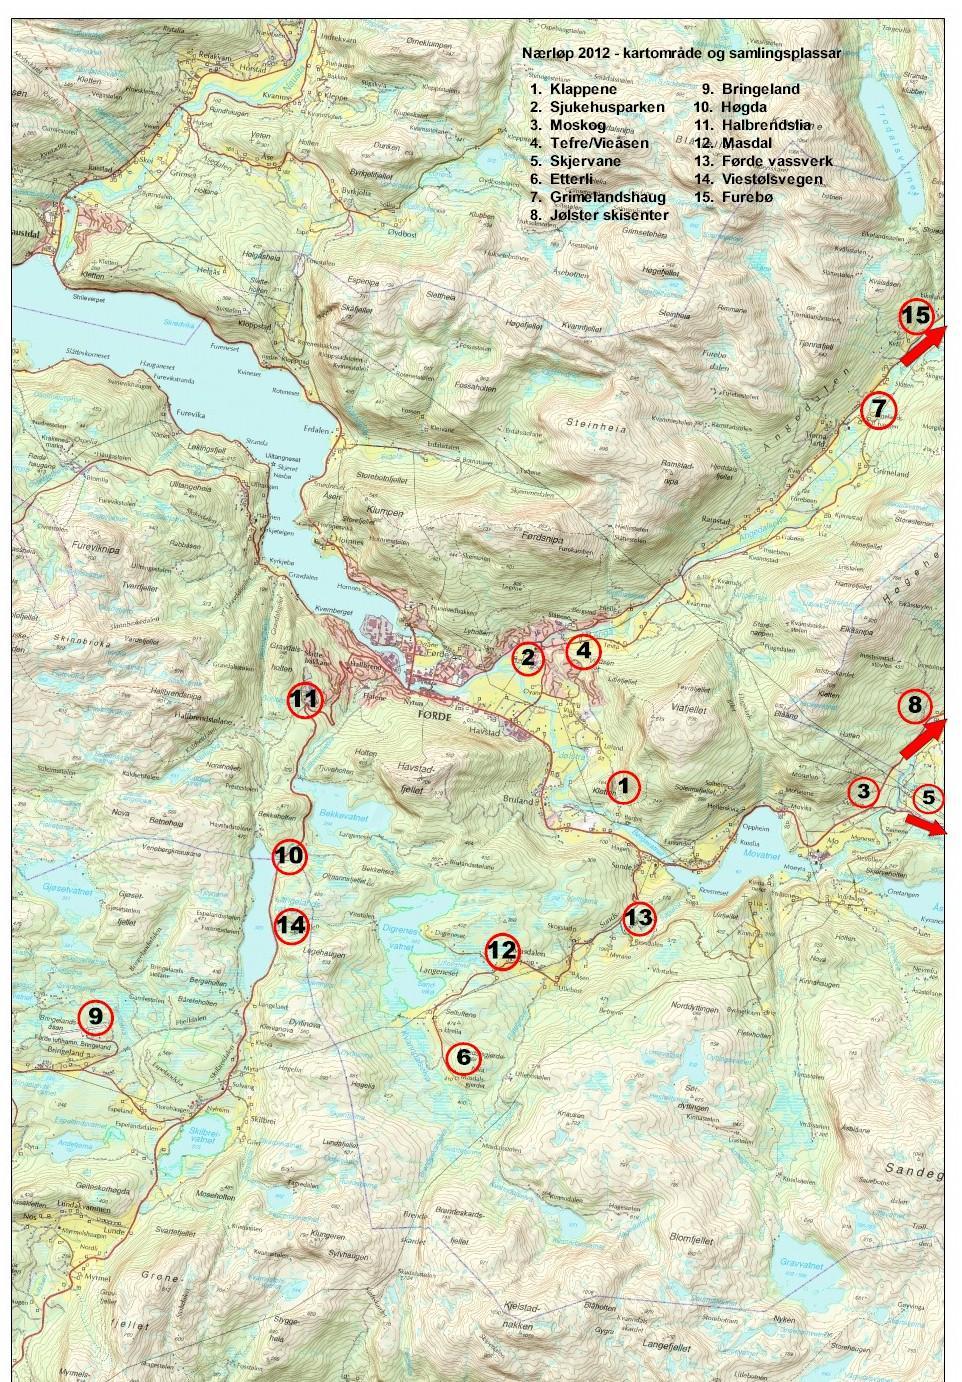 Nærløp 2012 kartområde og samlingsplassar (Terminlista og kartet kan du også